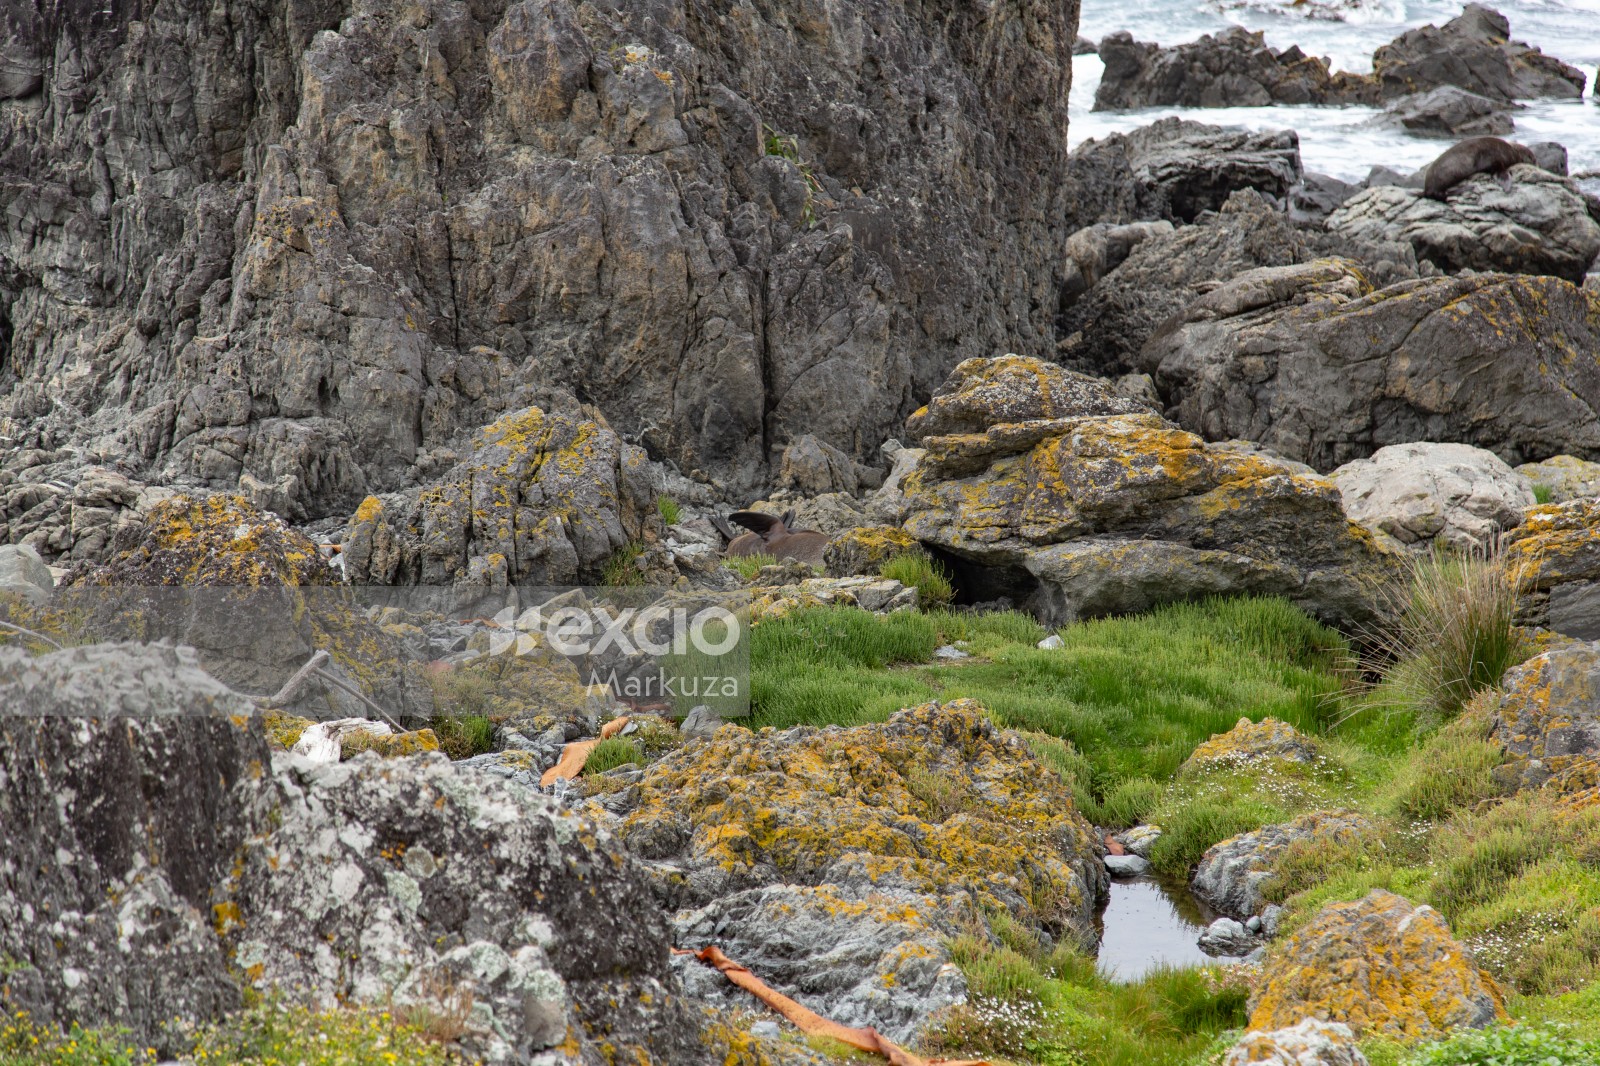 Seal hiding in the rocks